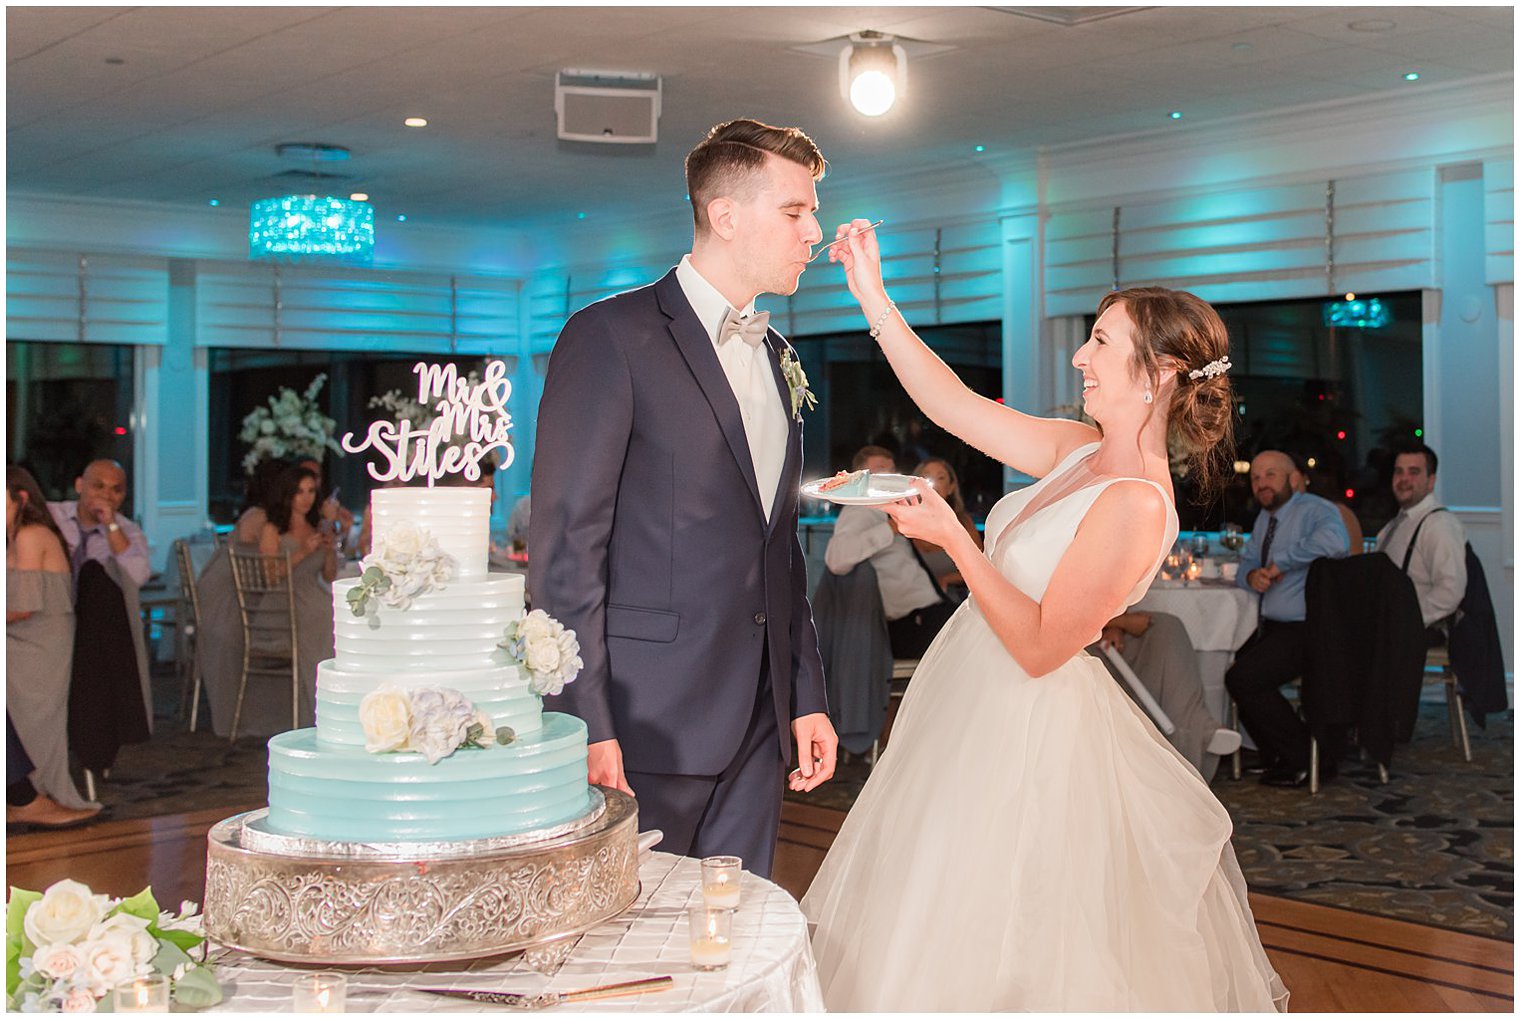 bride feeds groom cake during wedding reception